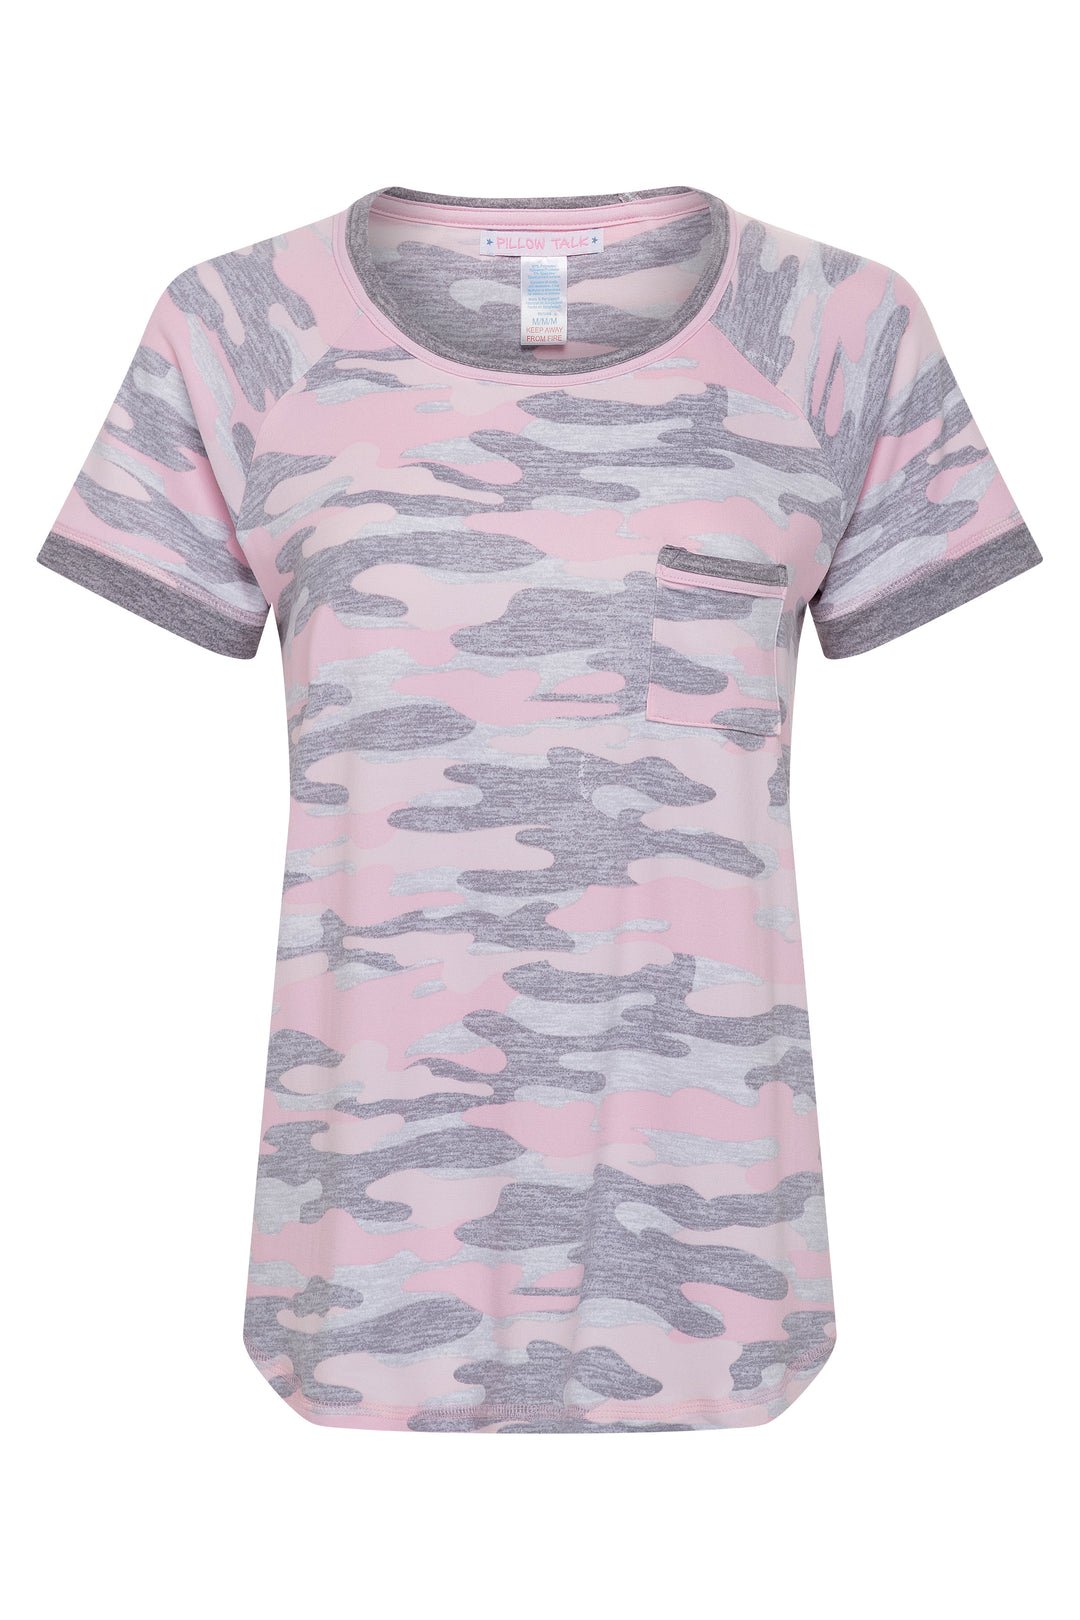 Pink Camo patterned shirt as part of the René Rofé 2 Pack Lightweight Shirt Set in Pink Camo pattern